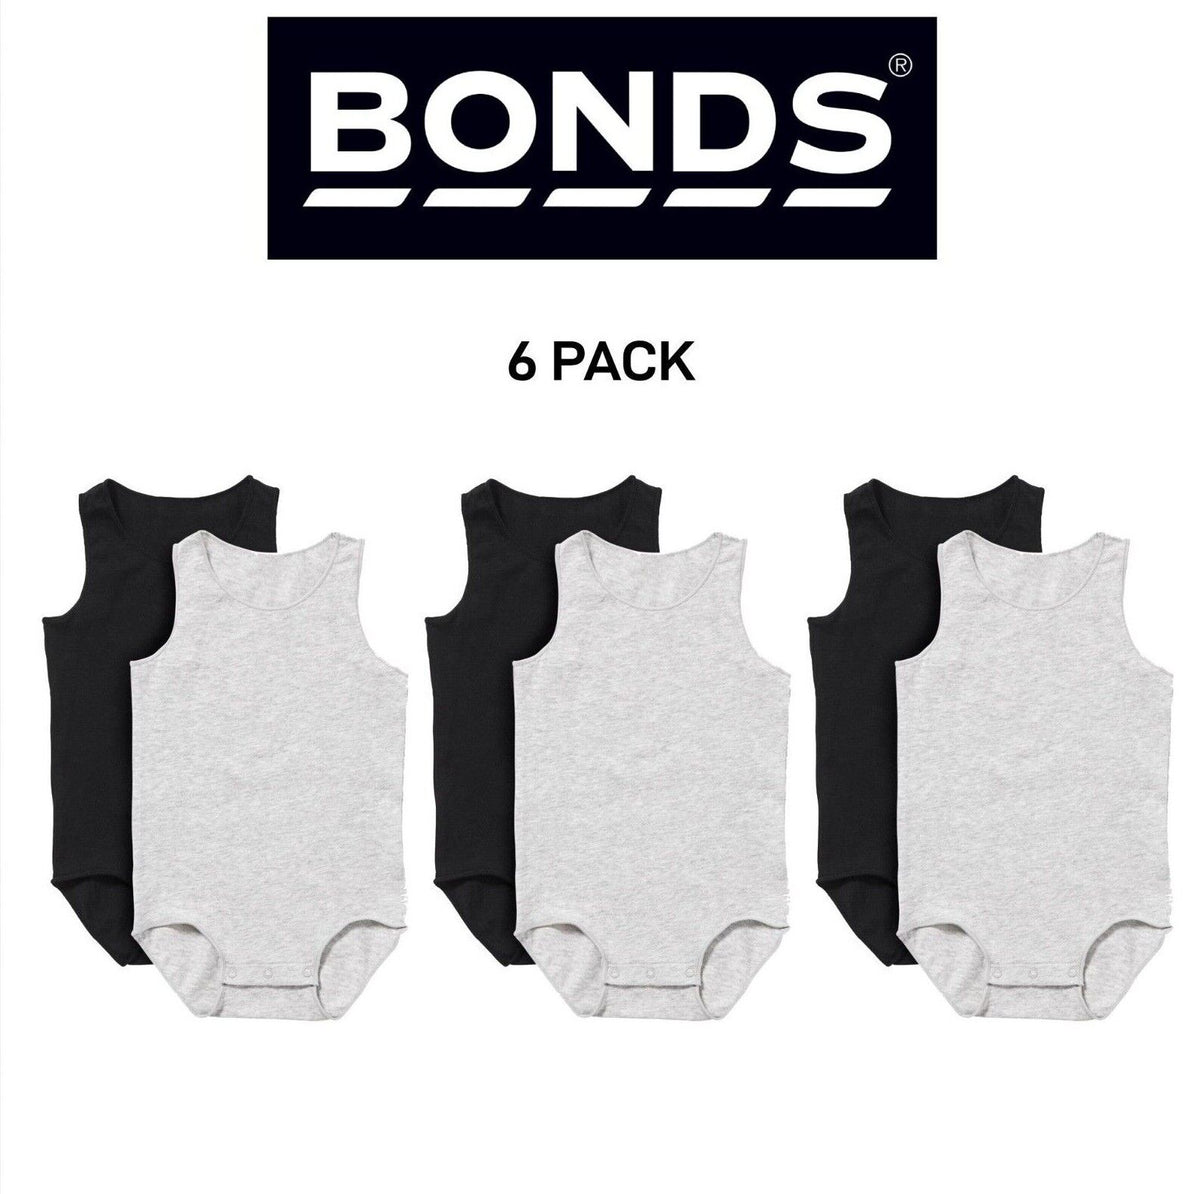 Bonds Baby Wonderbodies Singlet Suit Super Stretchy Cotton Fabric 6 Pack BXW6A